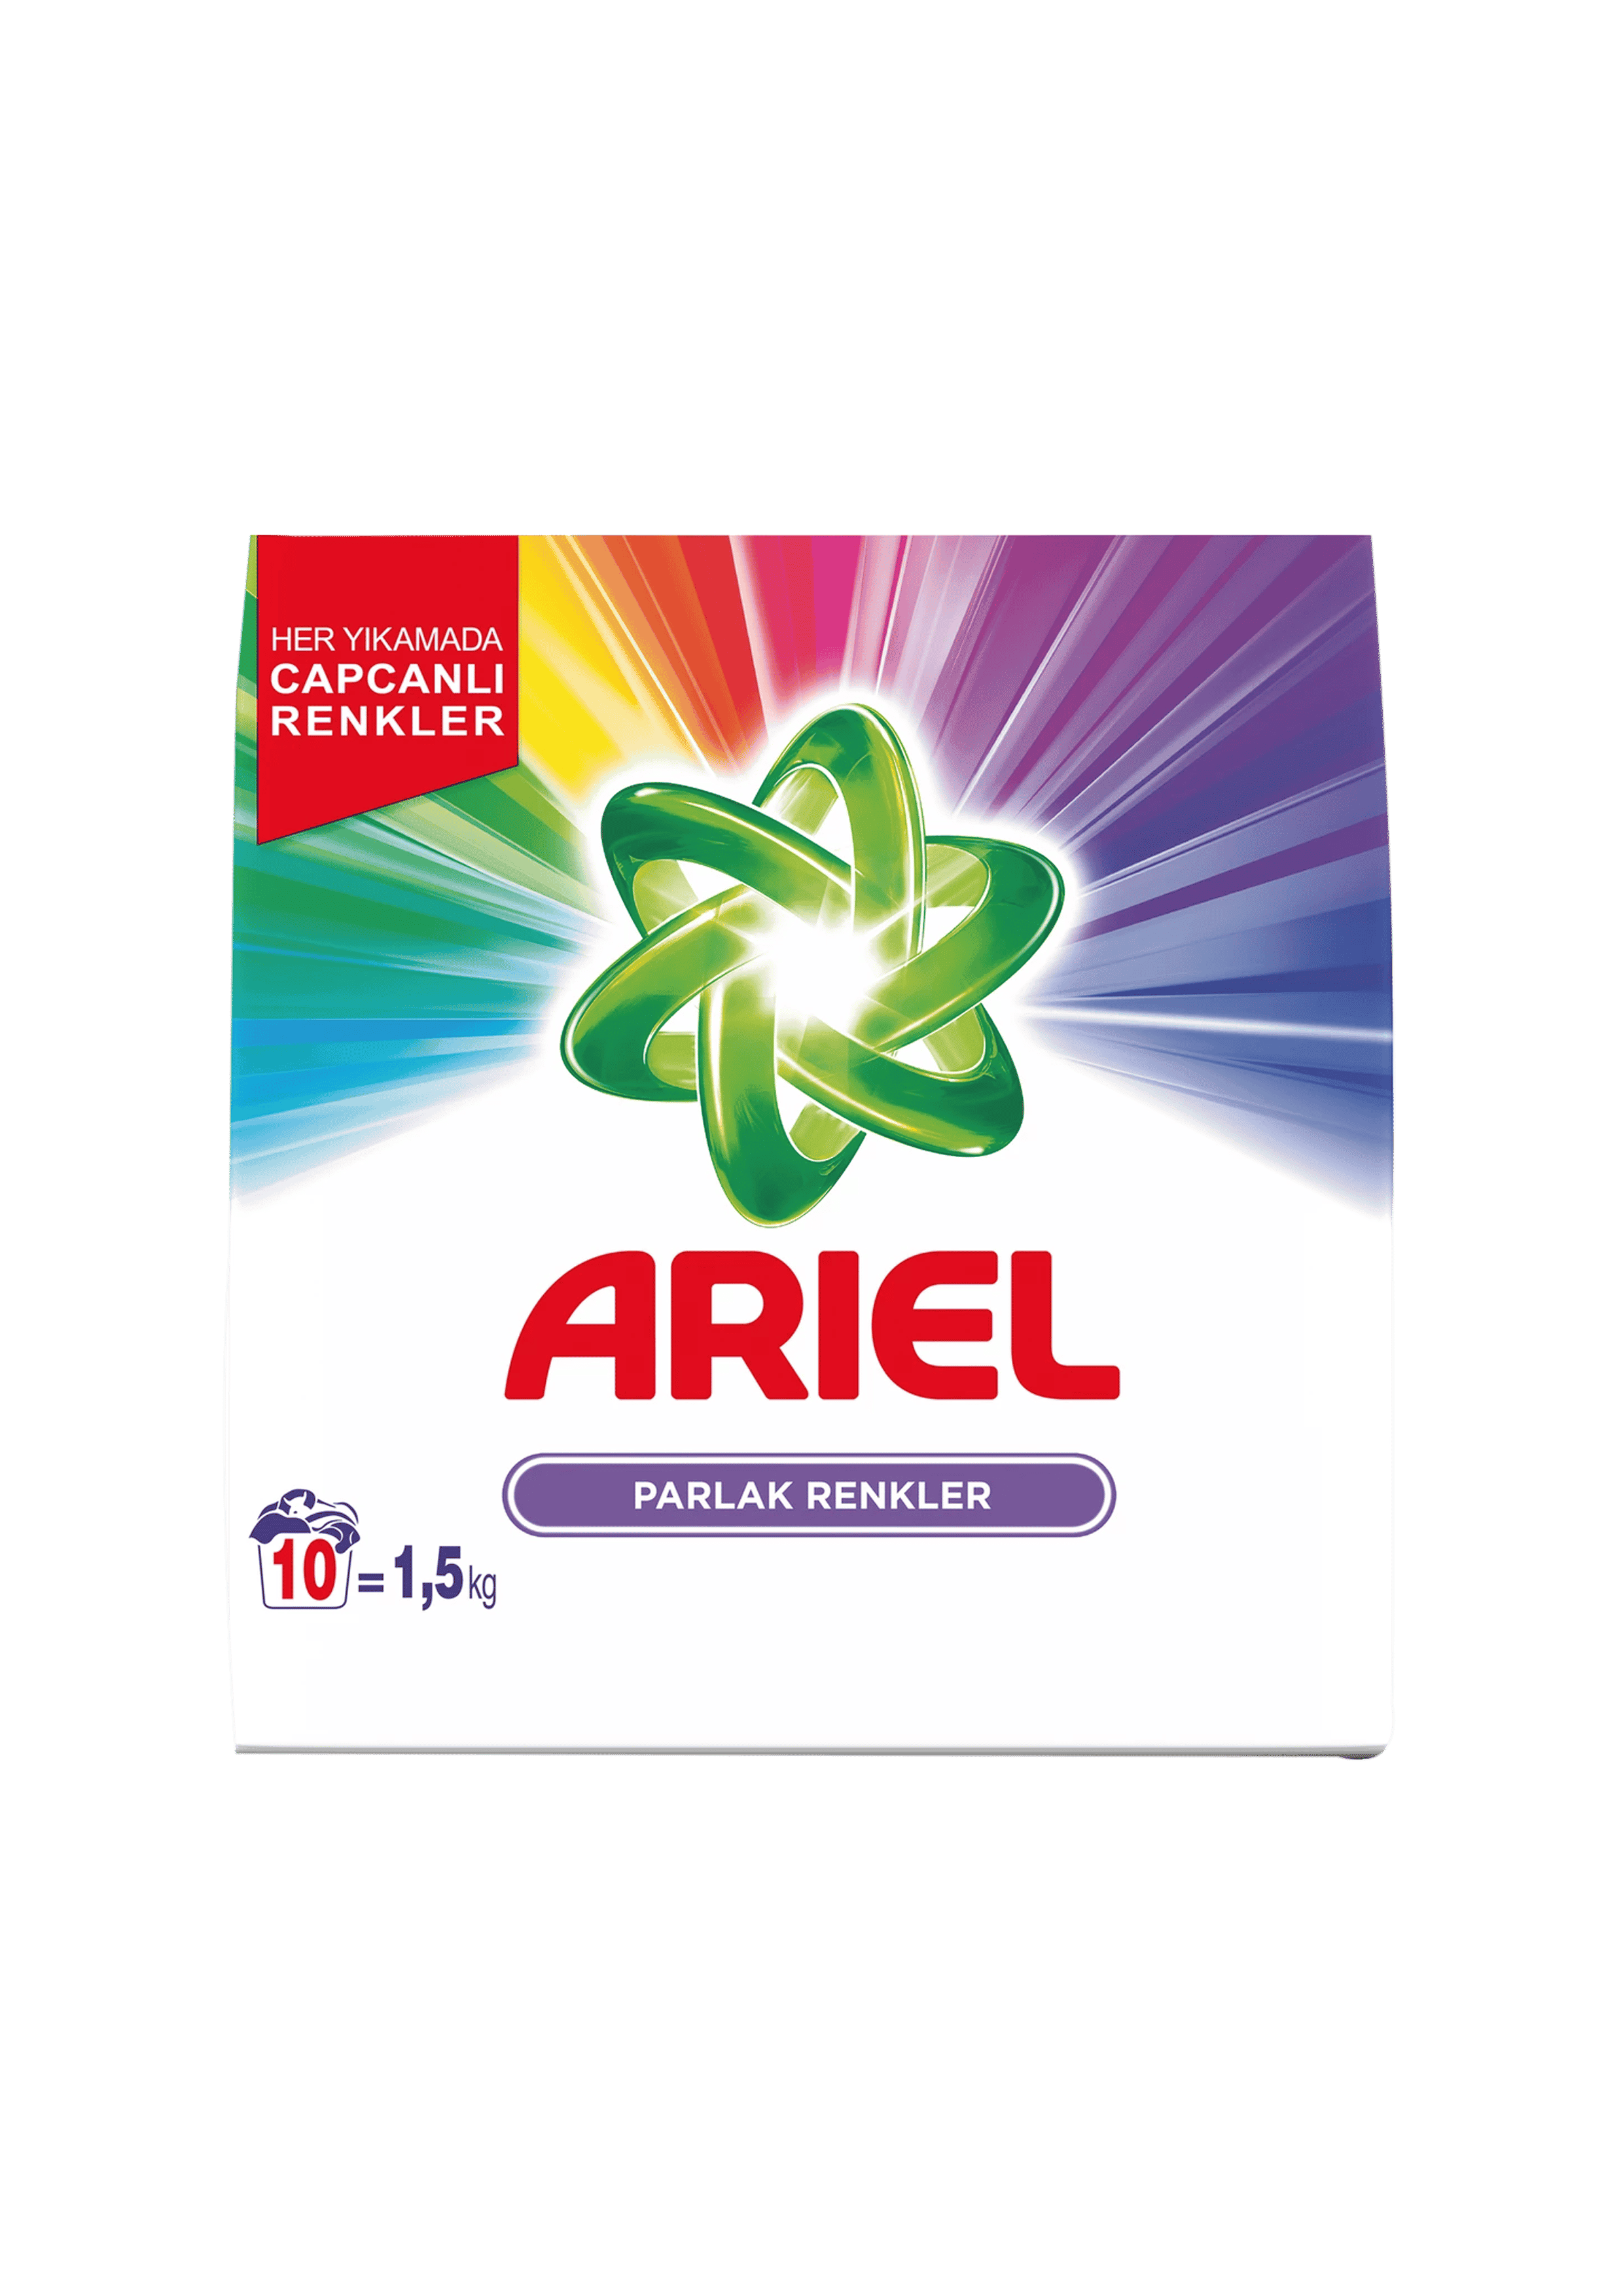 Ariel Parlak Renkler 1,5 Kg 